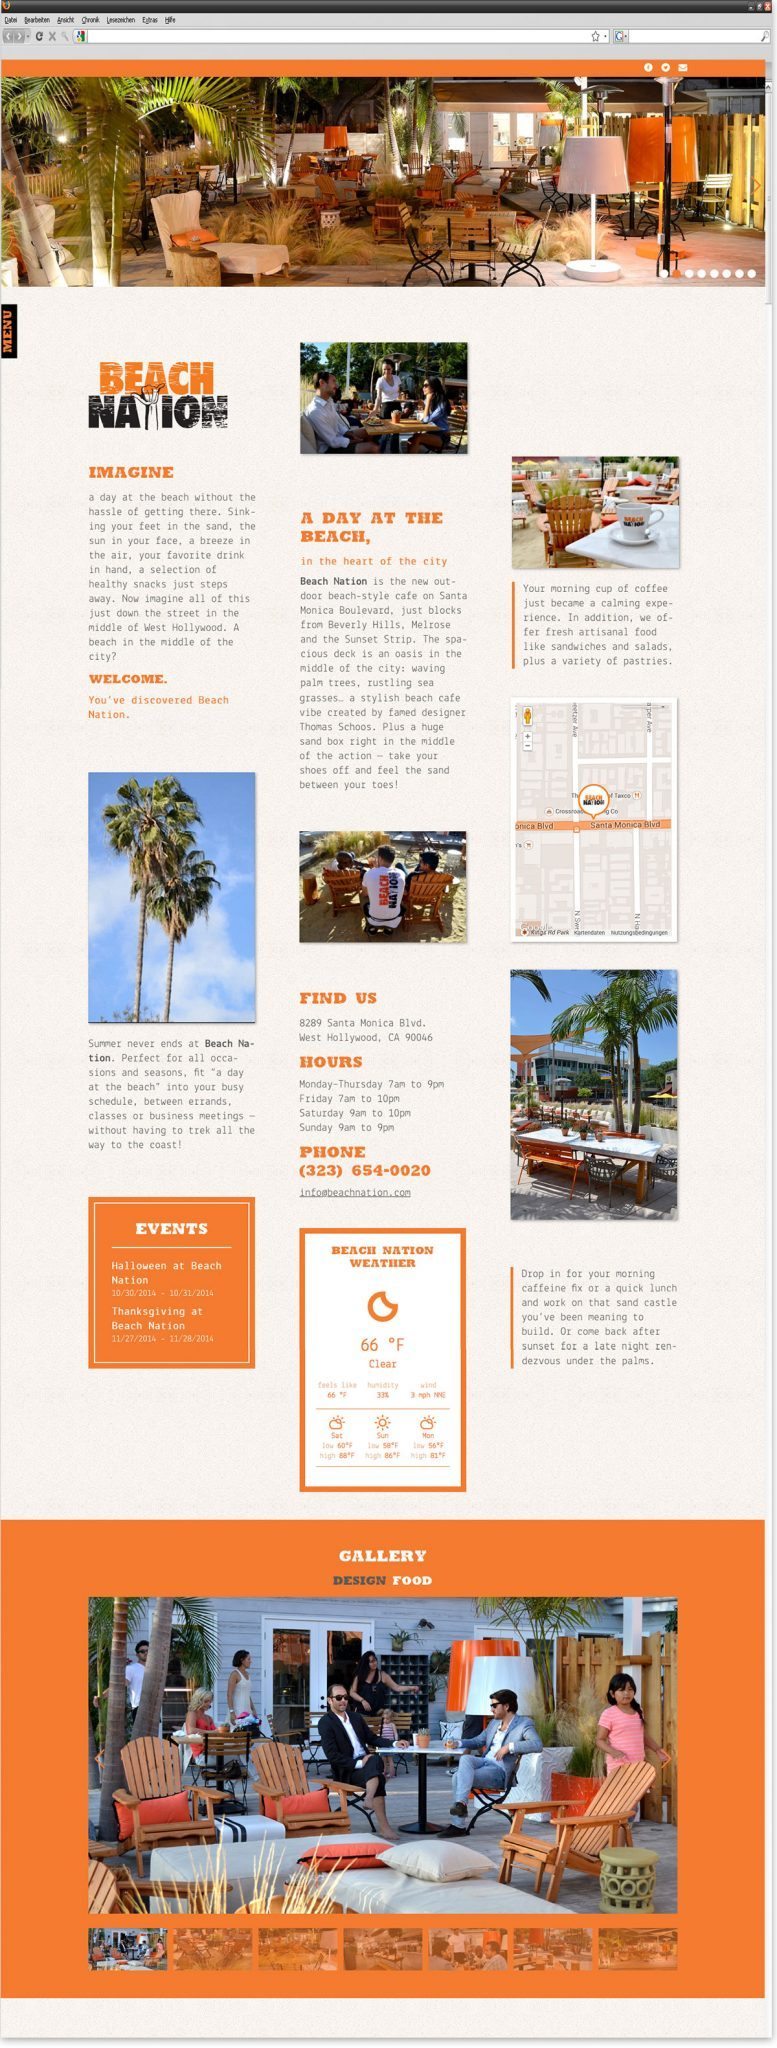 Beach Nation Website